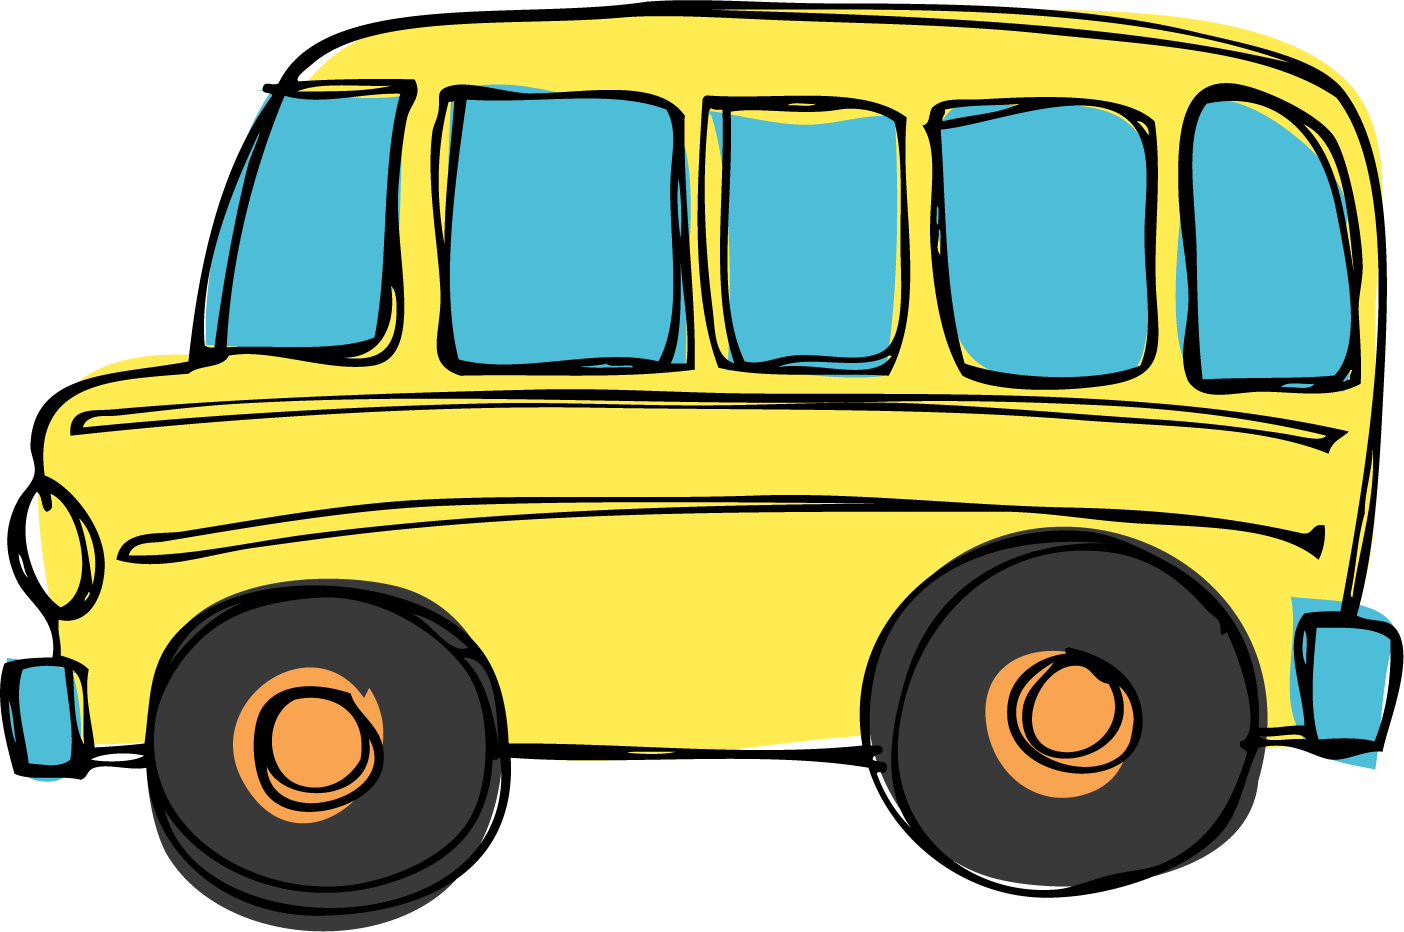 School bus clipart images 3 school bus clip art vector 2